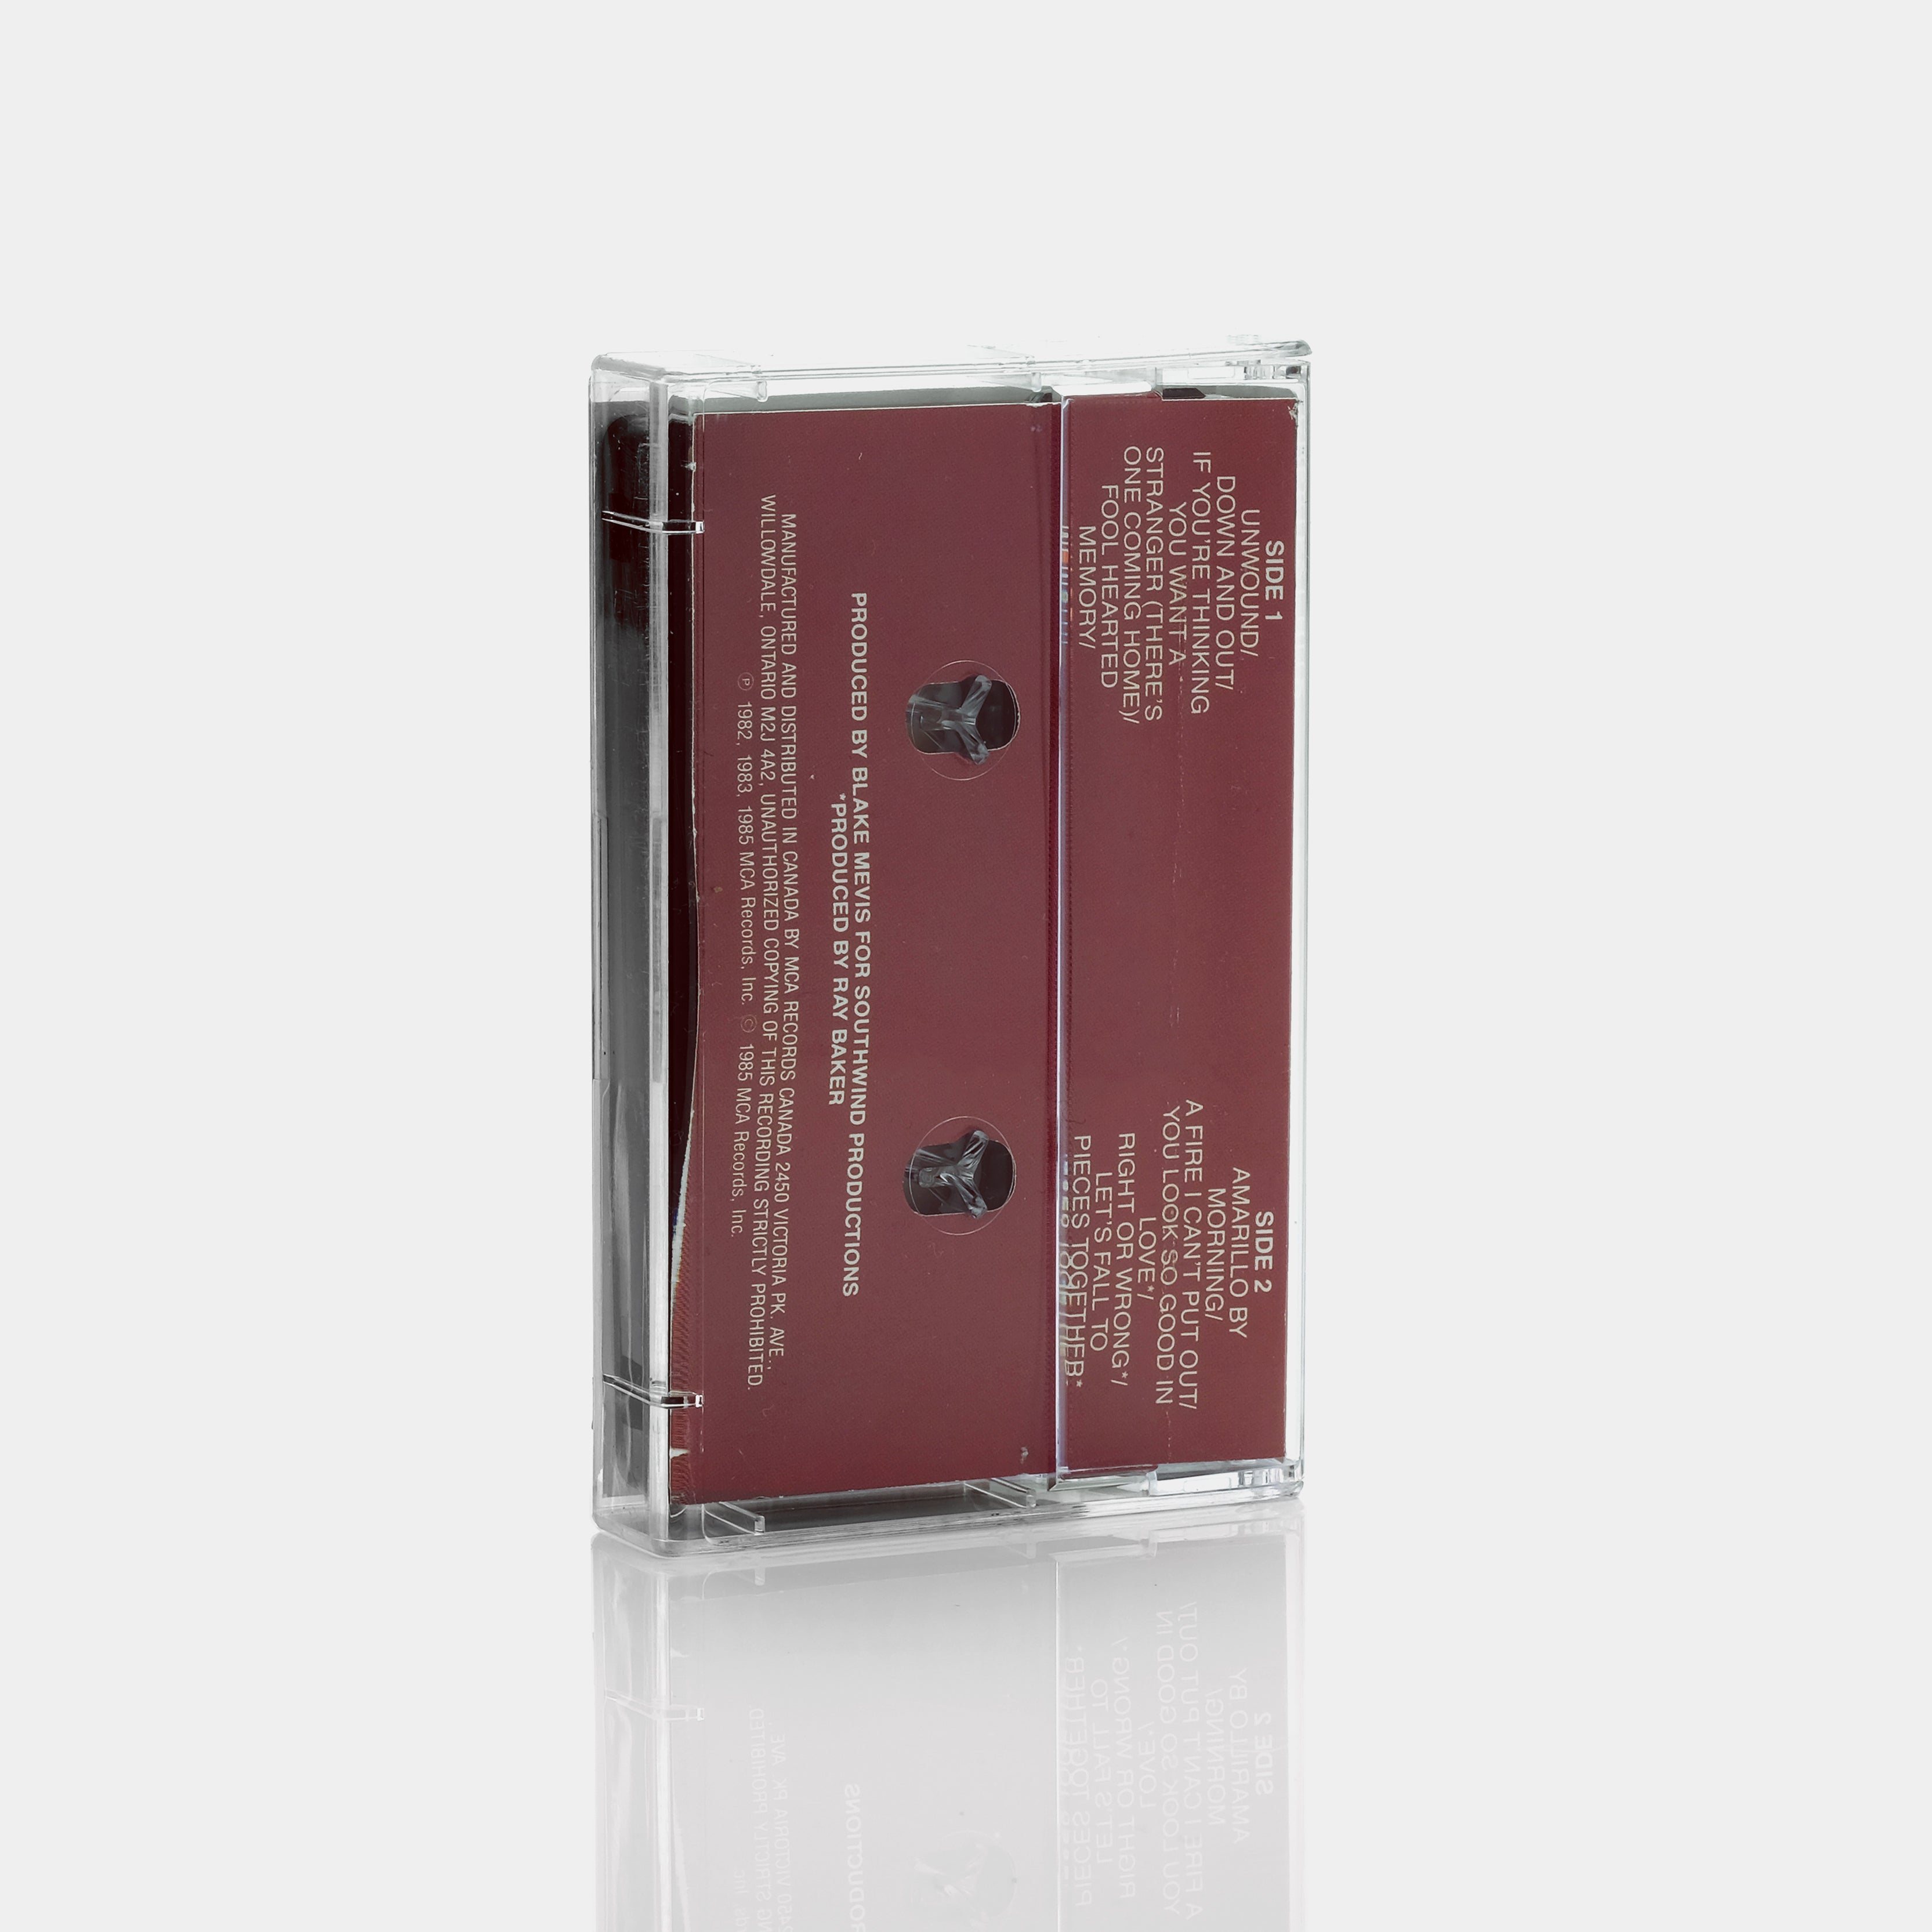 George Strait - Greatest Hits Cassette Tape